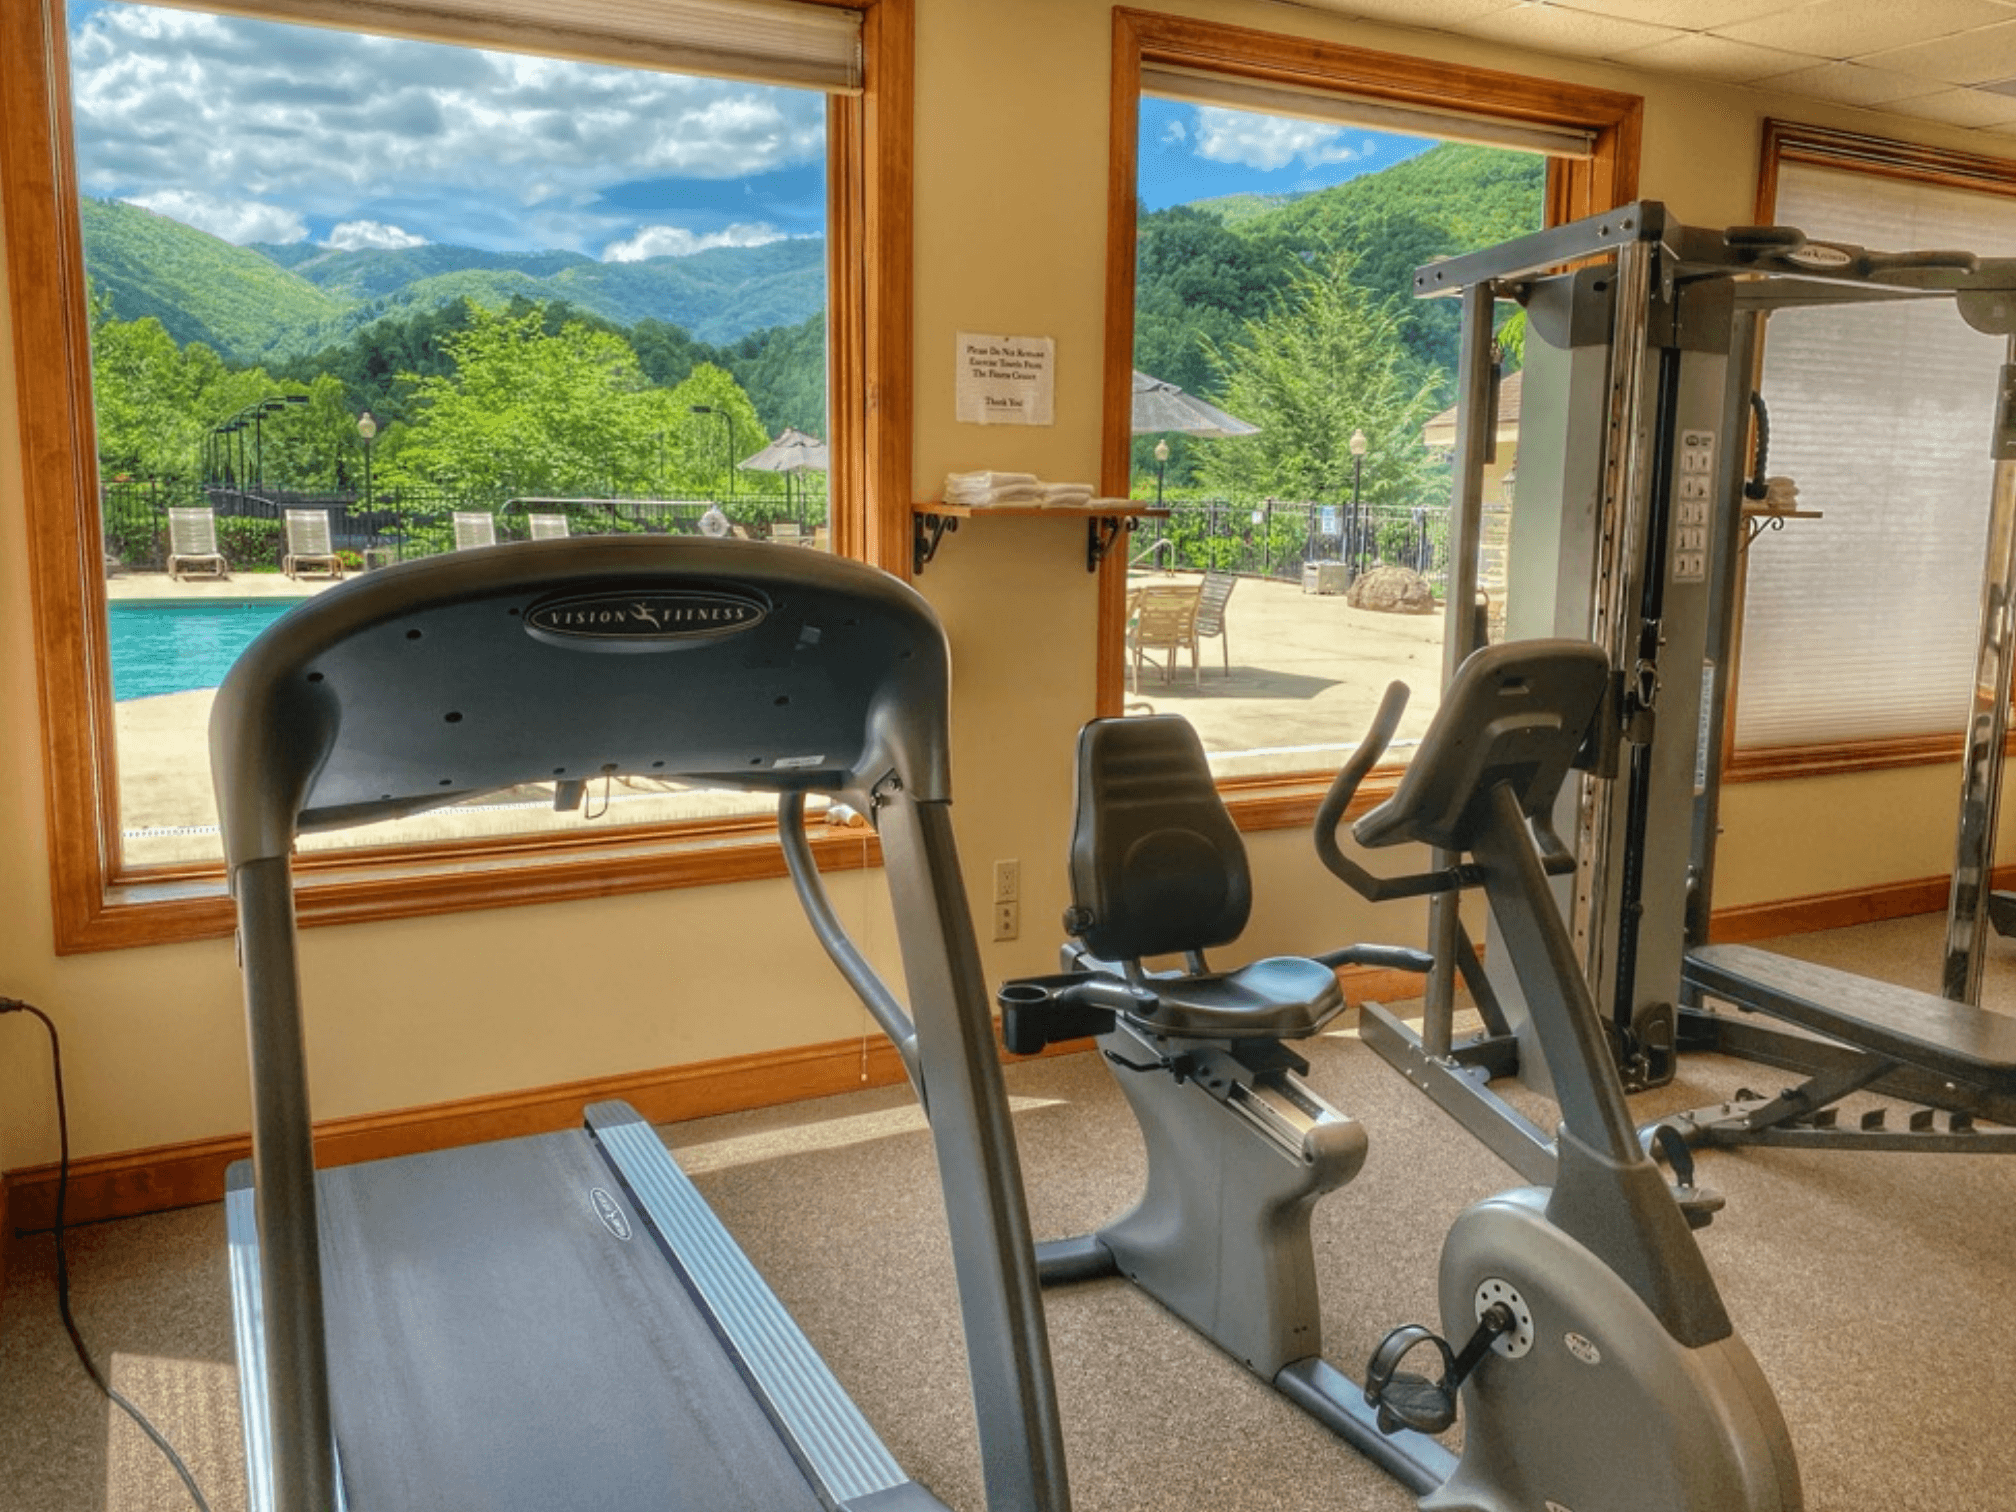 Smoky Mountain Country Club FItness Room